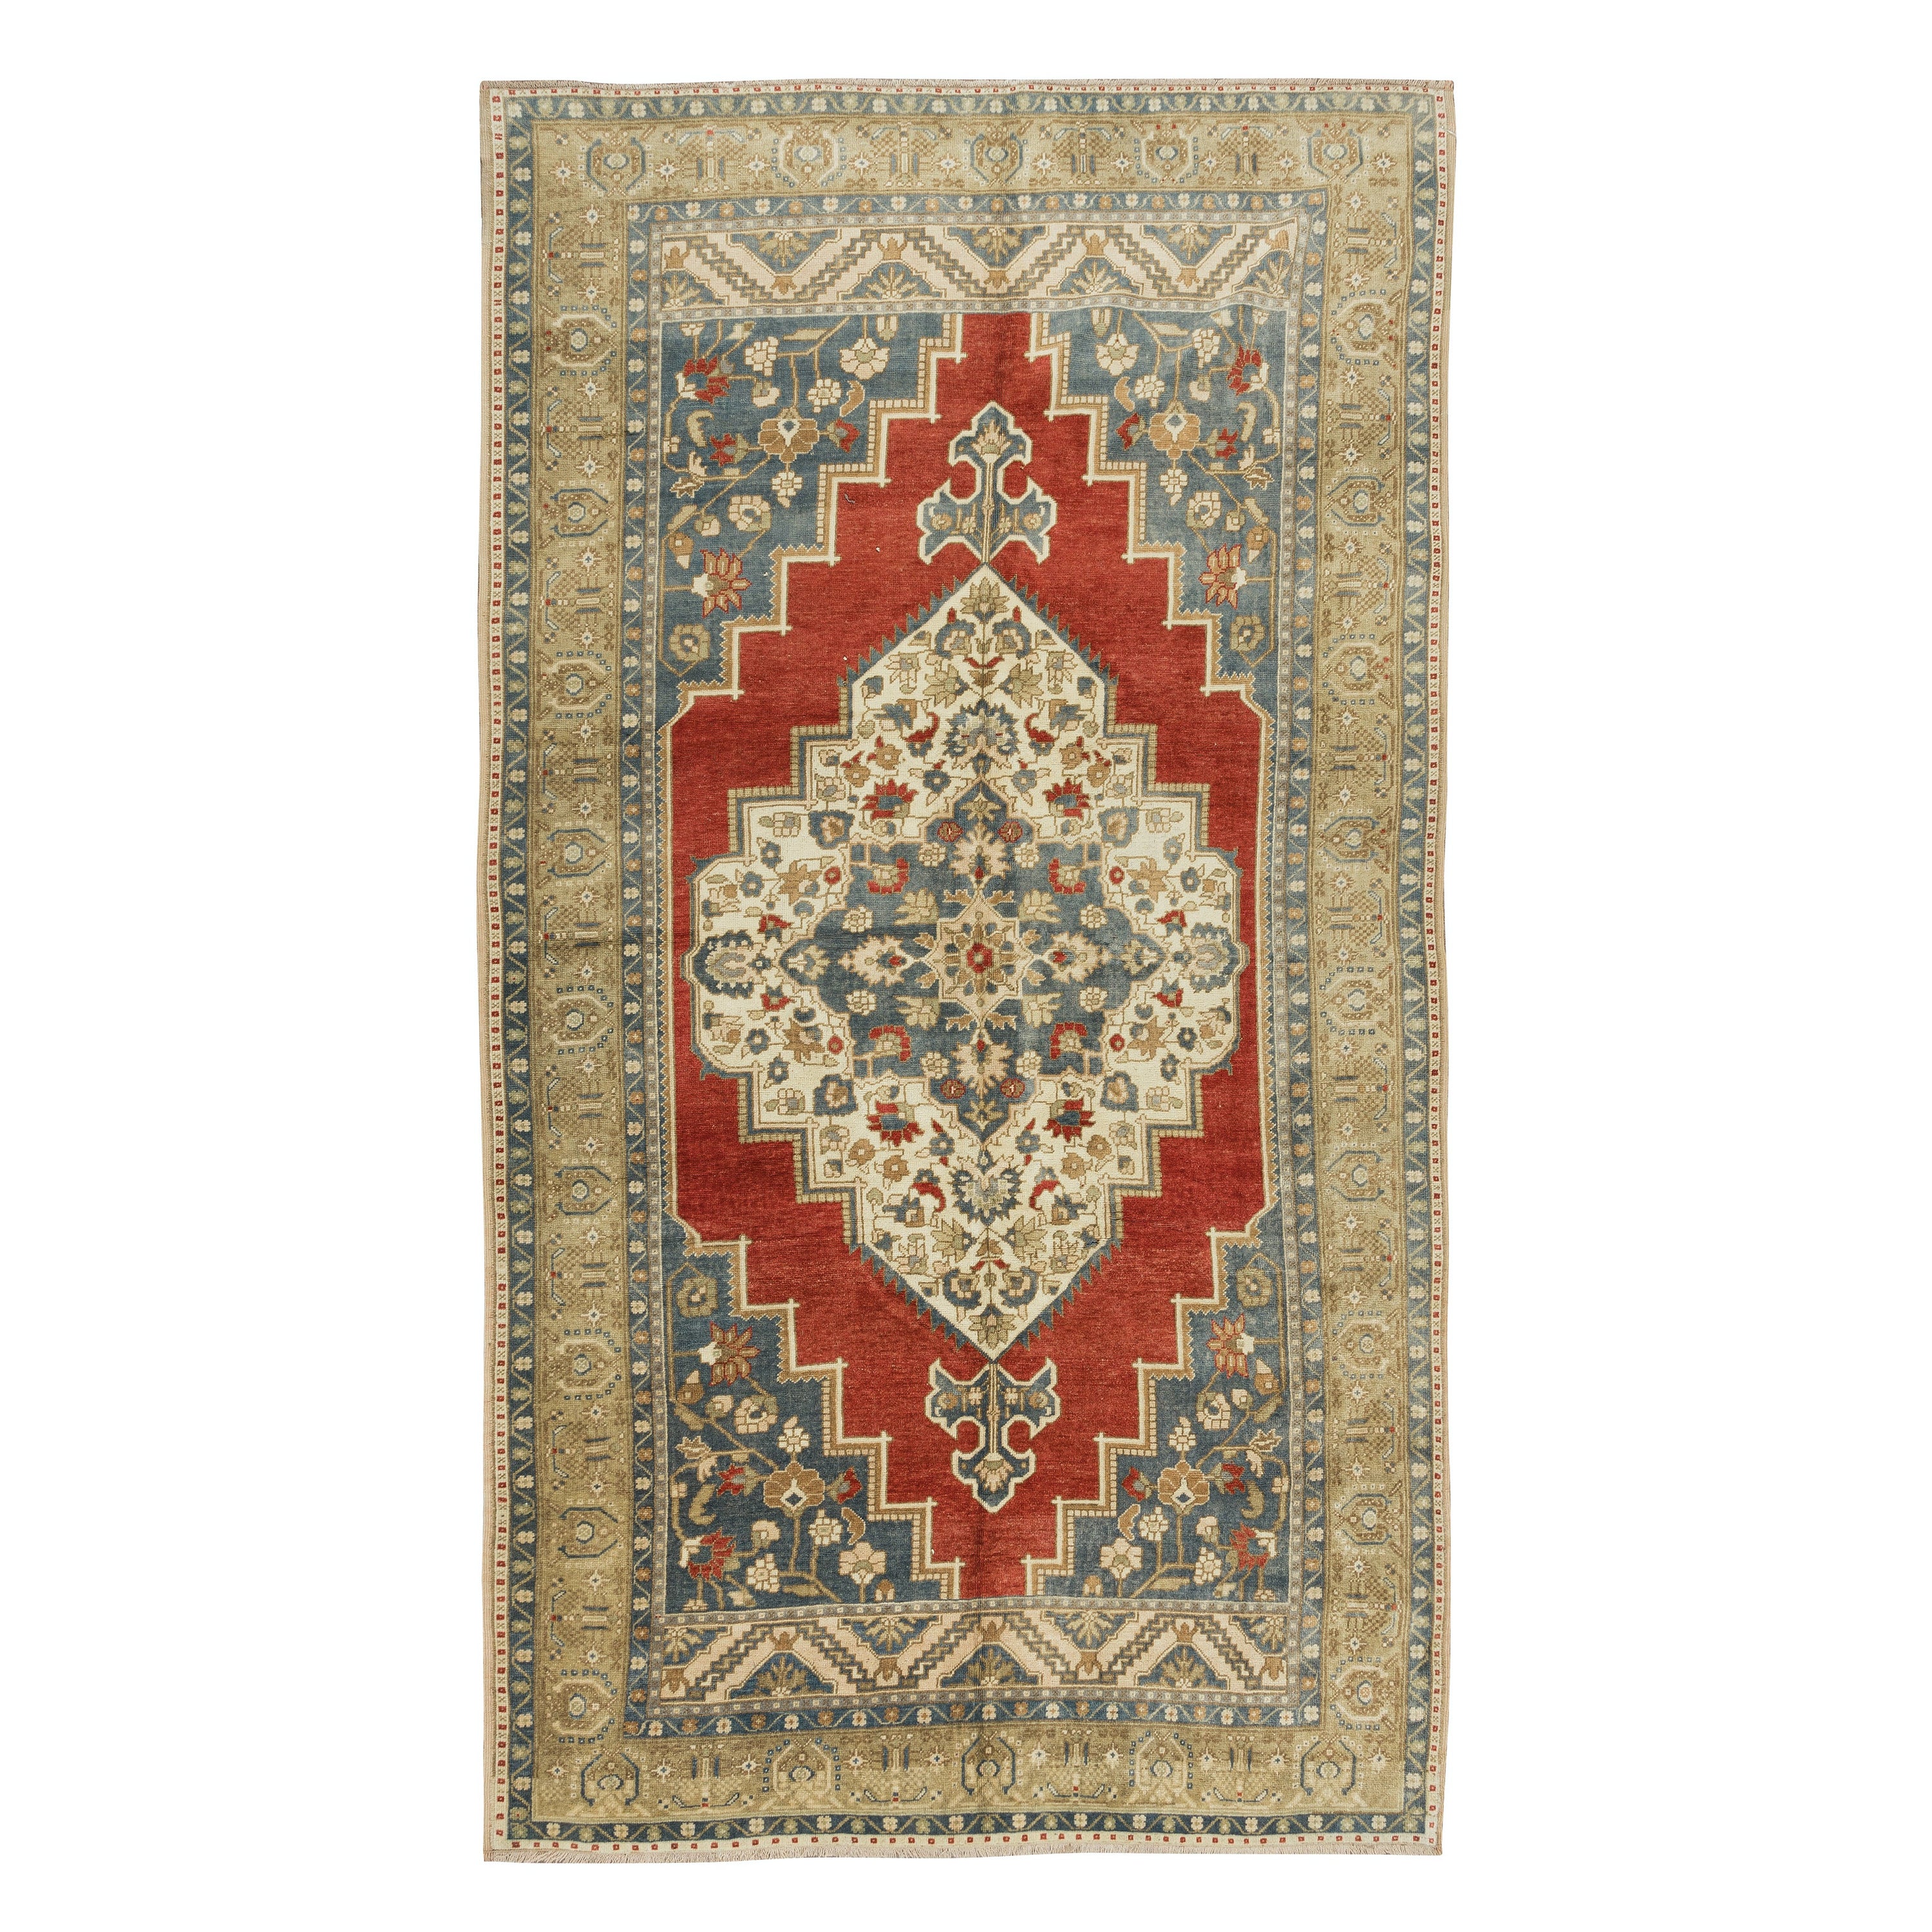 6x11 Ft Vintage Handmade Turkish Tribal Wool Rug, Medallion Design Unique Carpet (tapis unique)